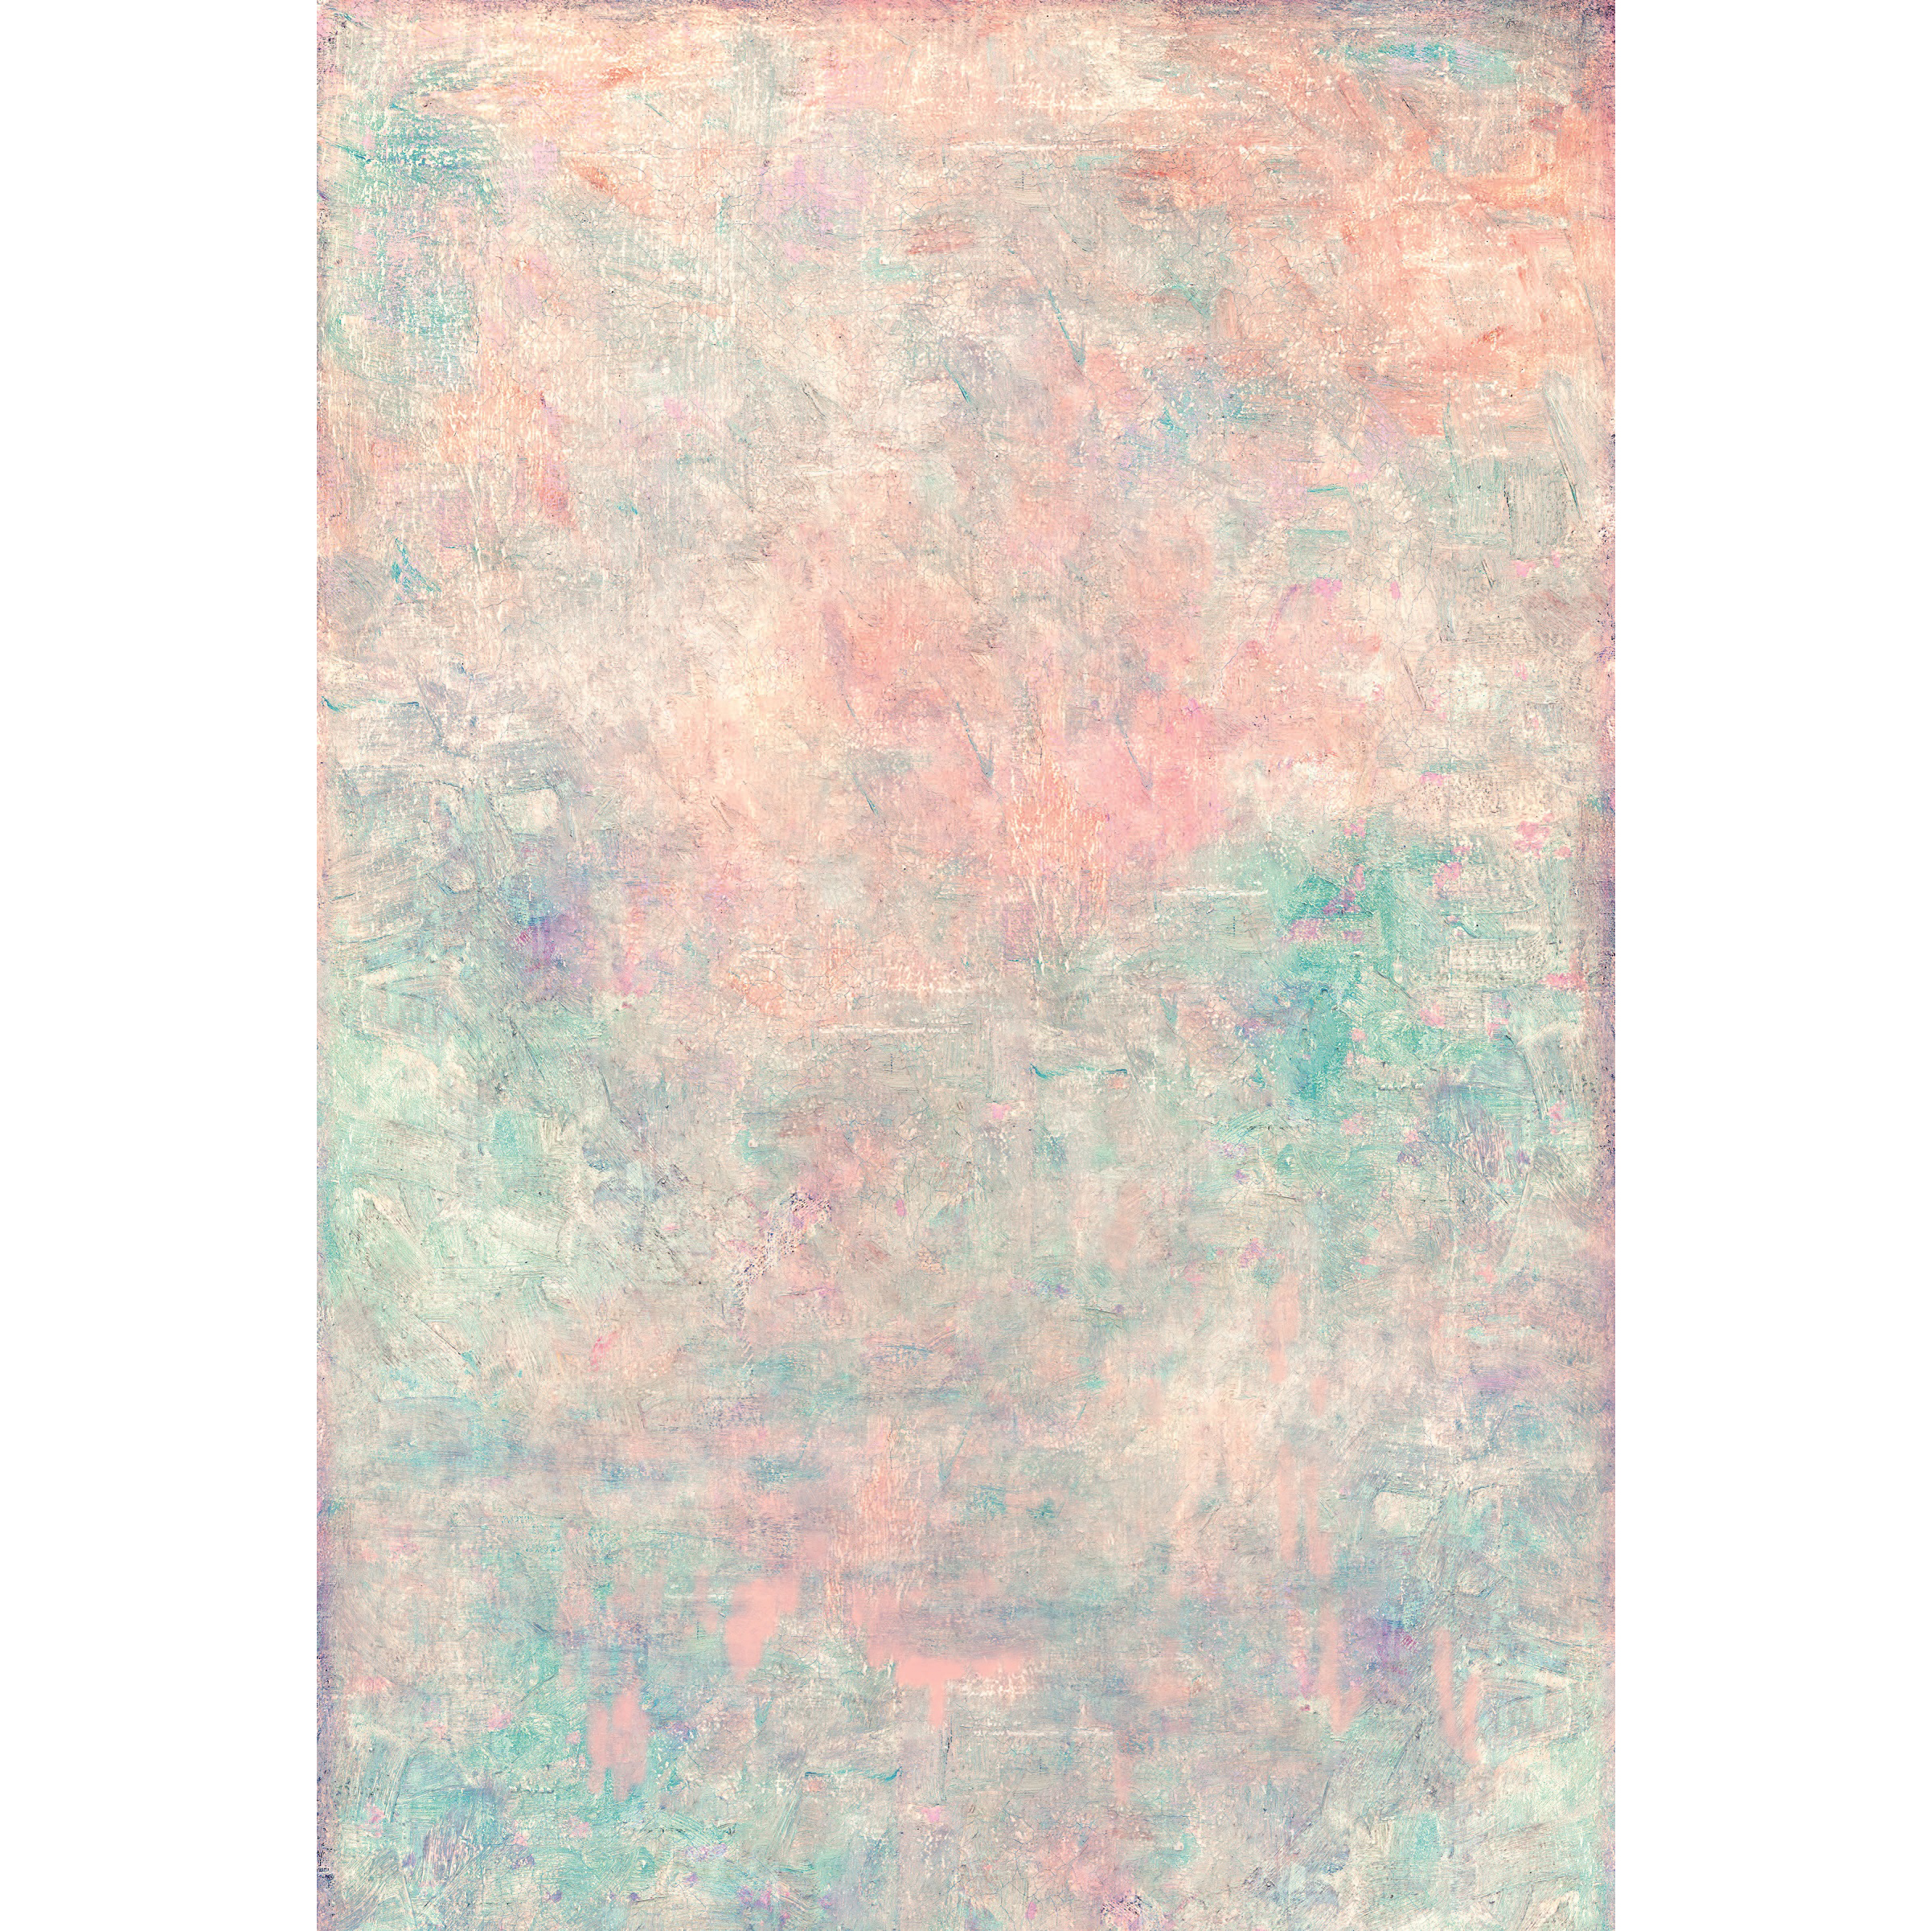 BRESSER Hintergrundstoff mit Fotomotiv 80 x 120 cm - Pastell Aquarell